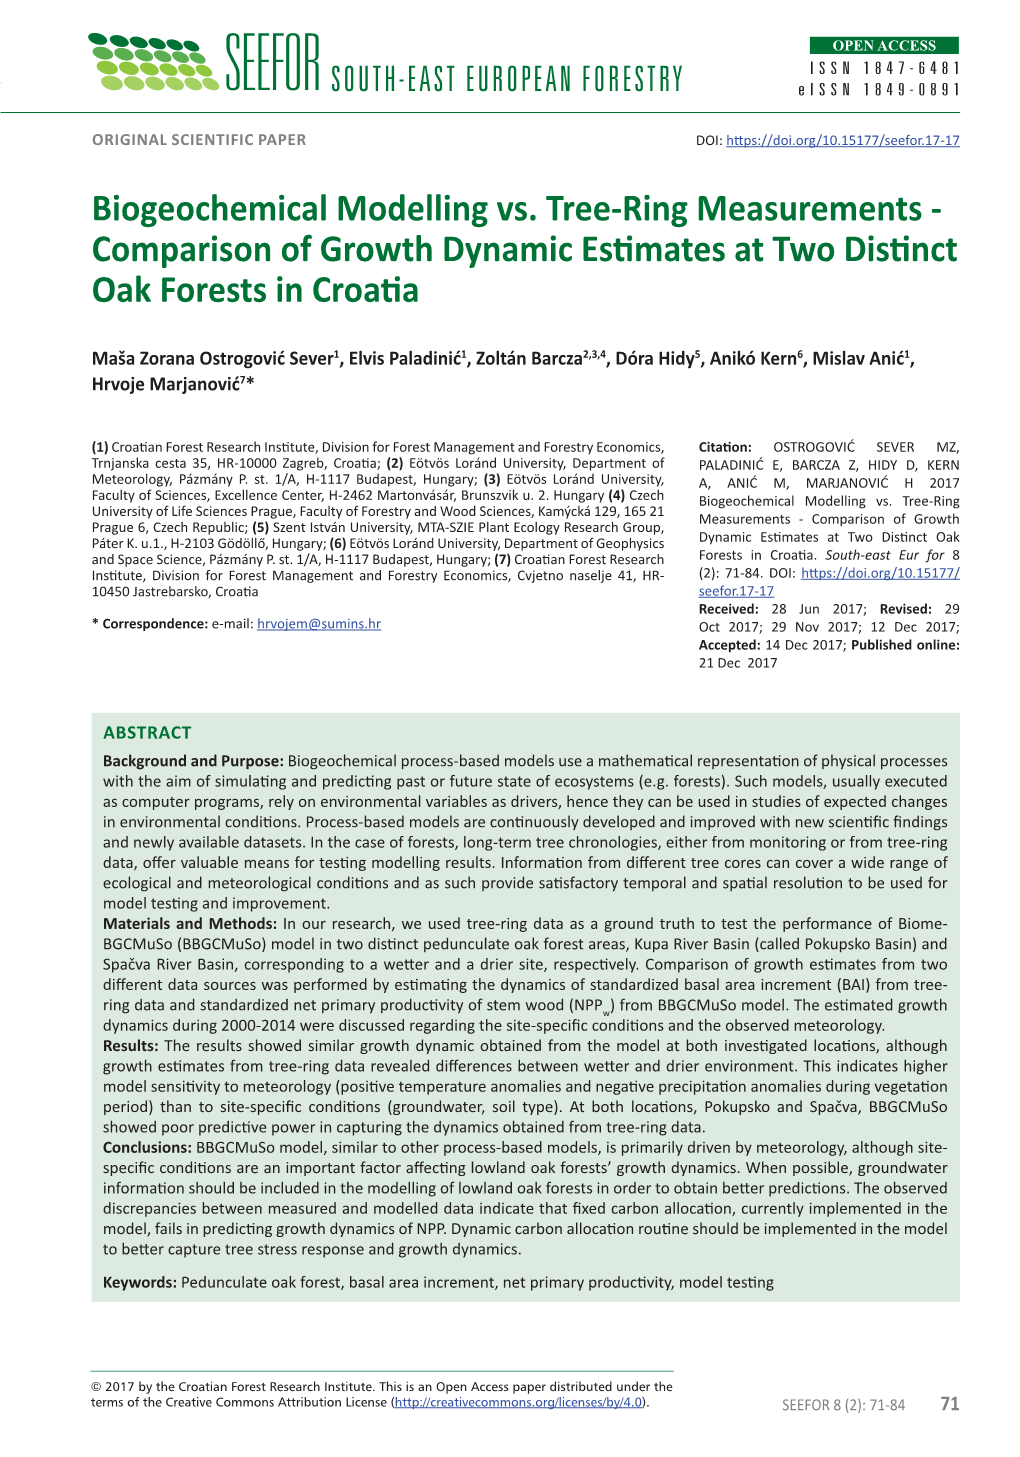 Biogeochemical Modelling Vs. Tree-Ring Measurements - Comparison of Growth Dynamic Estimates at Two Distinctissn Oak1847-6481 Forests in Croatia Eissn 1849-0891